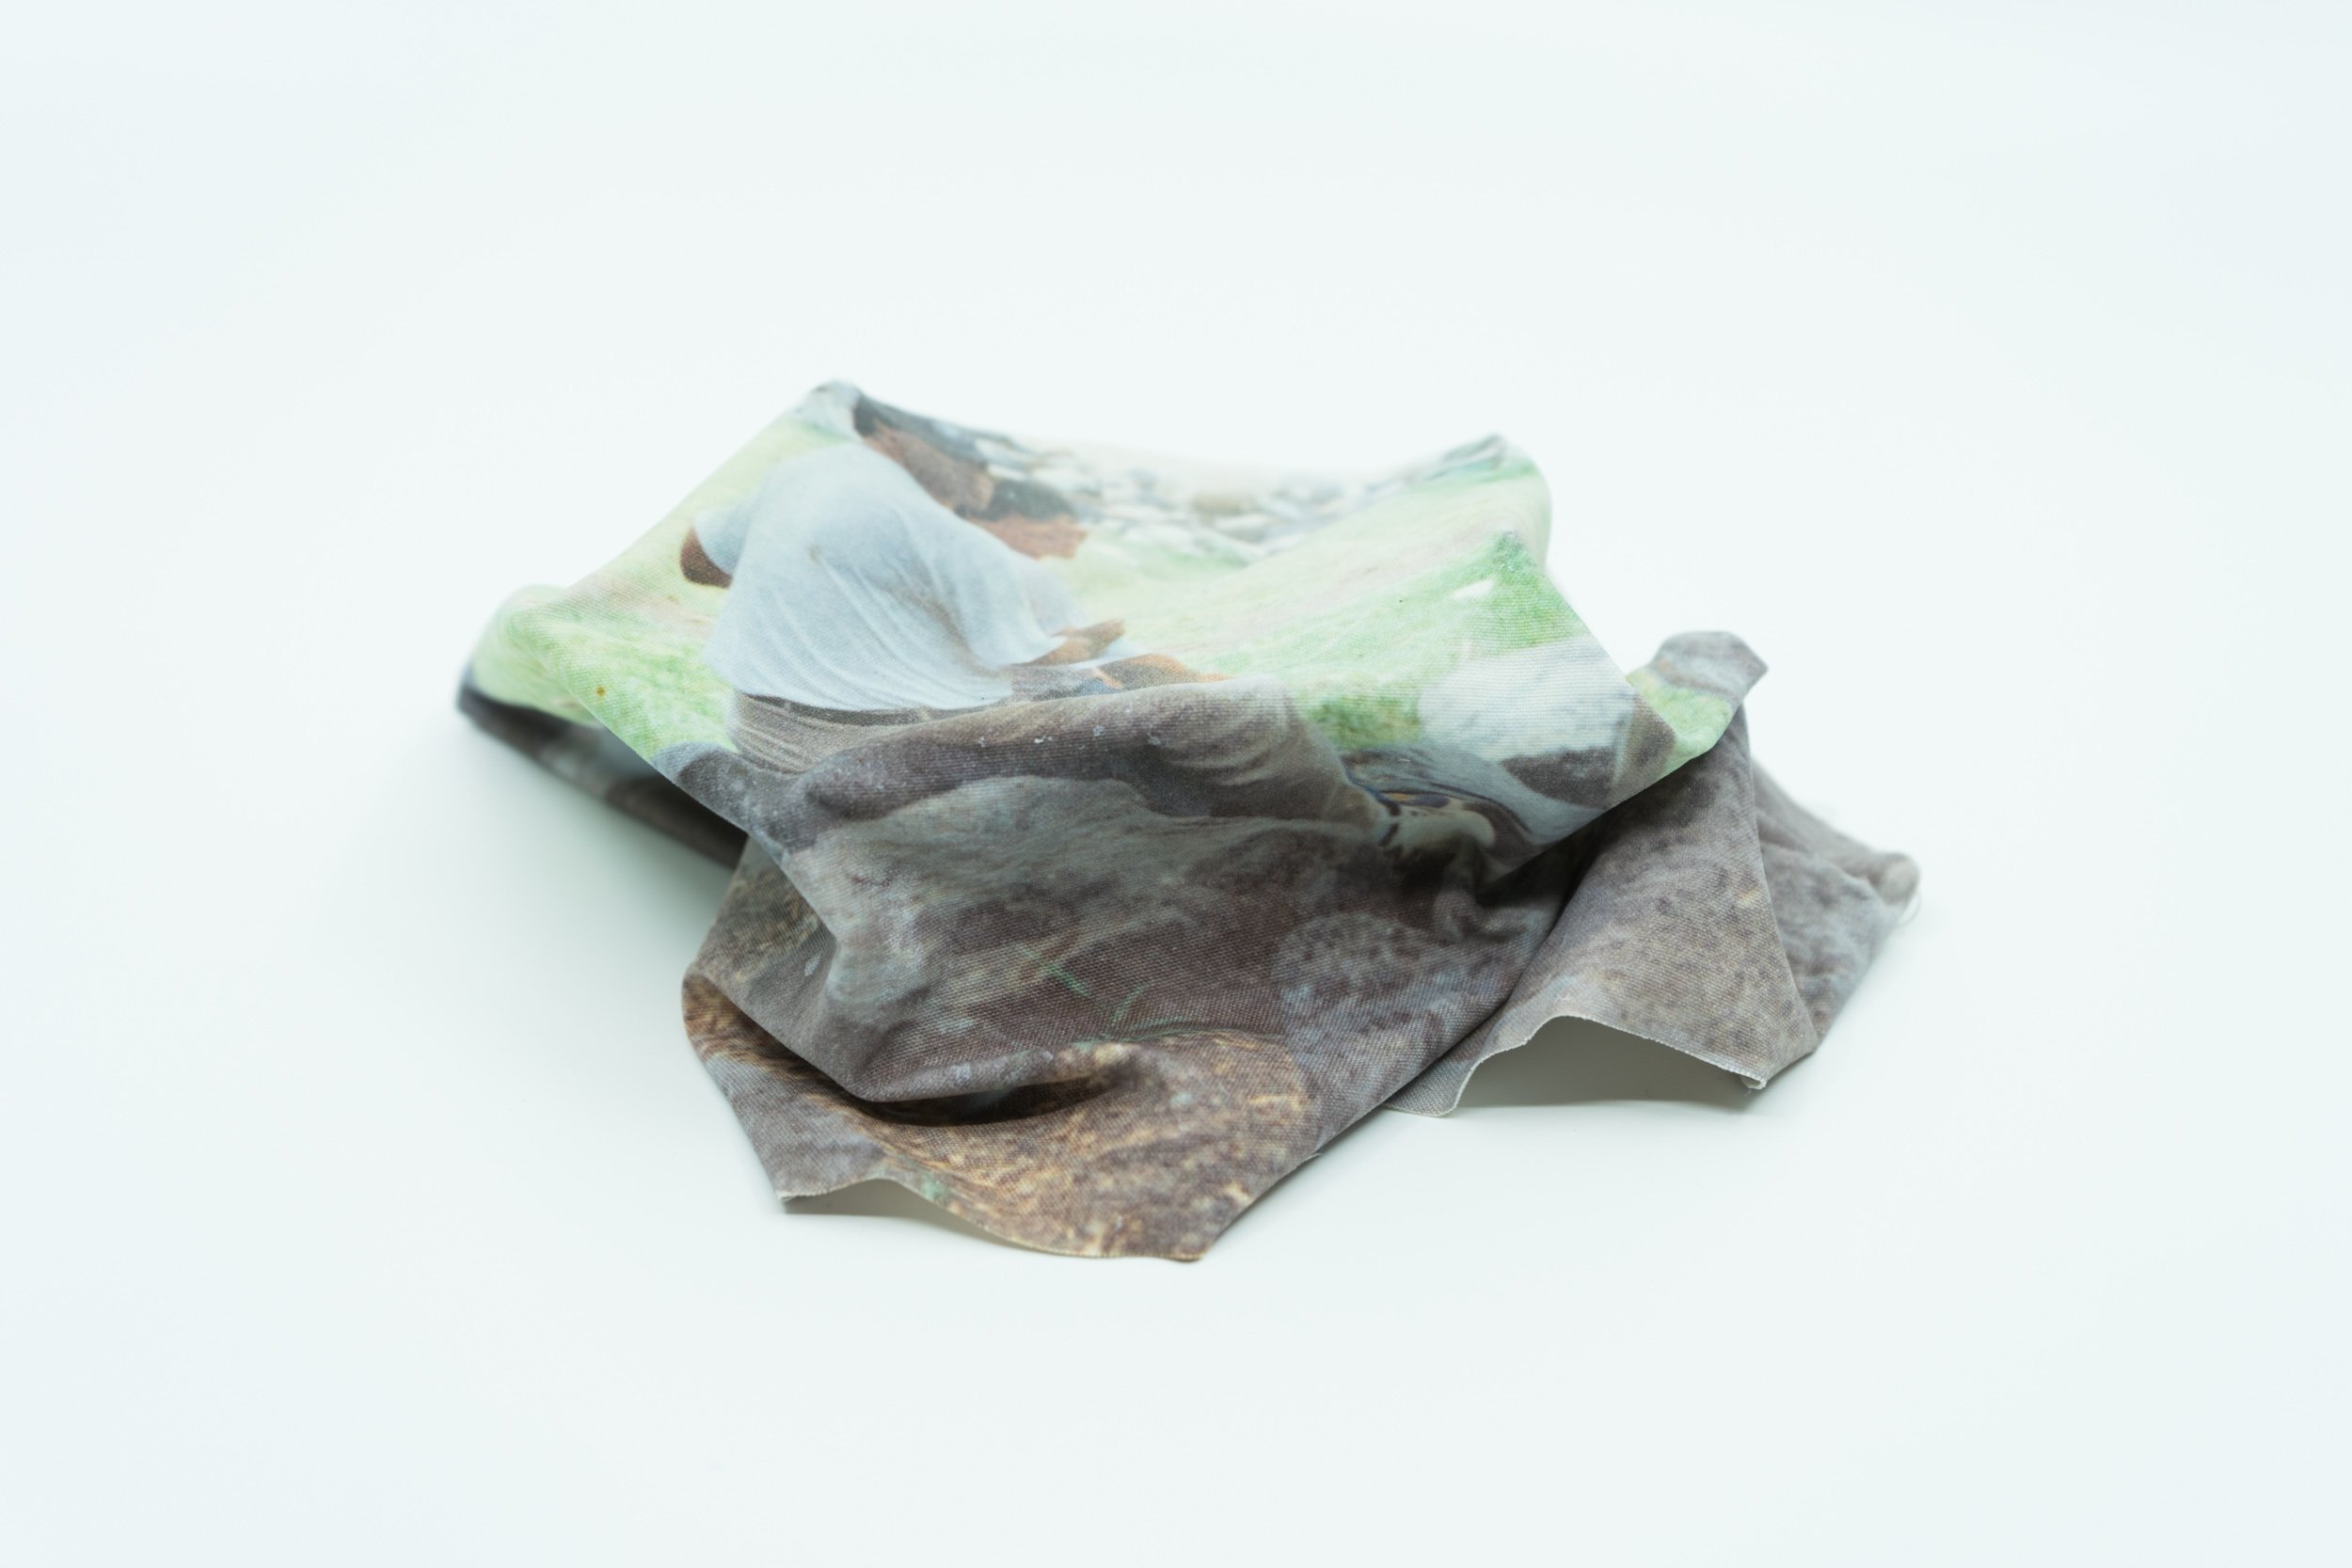  Inkjet print on broadcloth, salt from the Great Salt Lake 2” x 7” x 6” 2020    